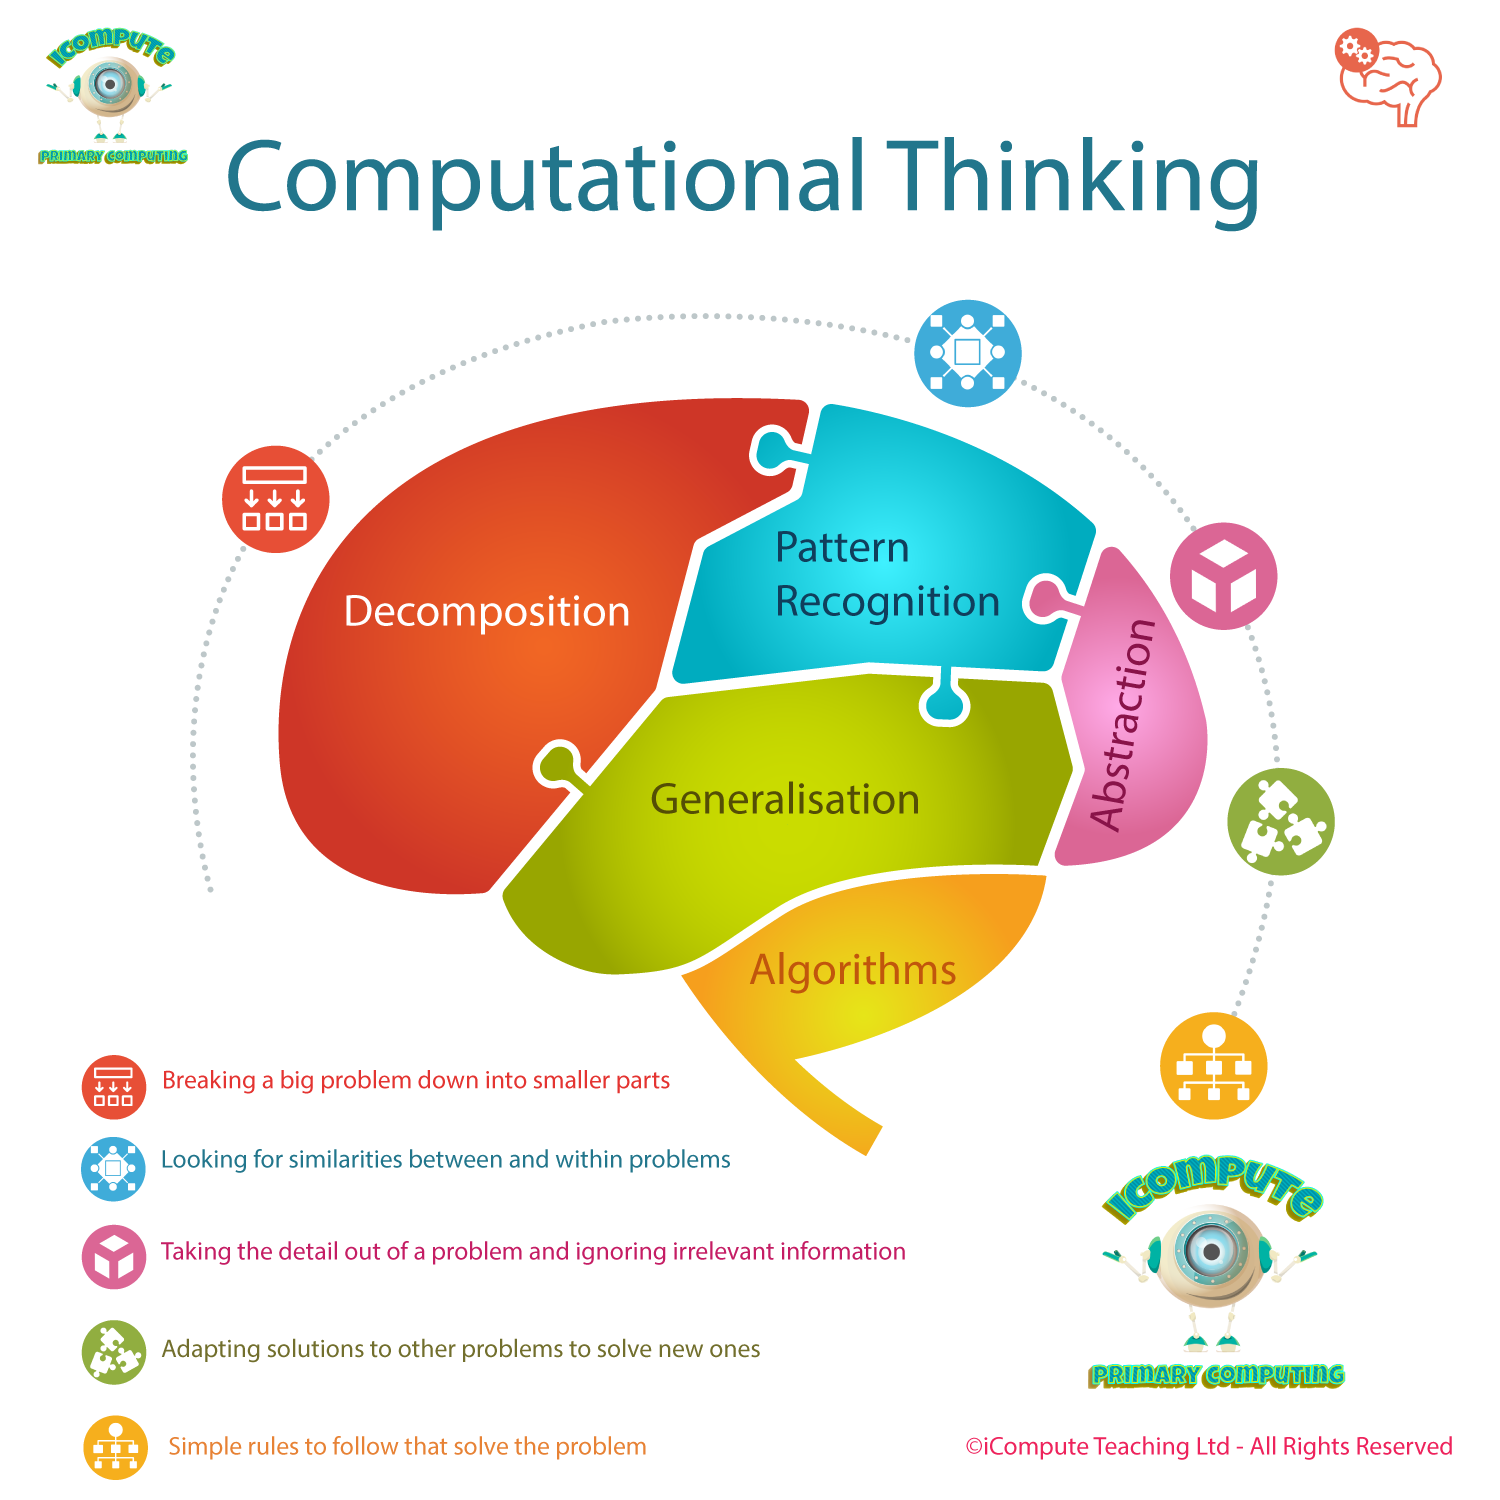 5 steps of problem solving using computational thinking